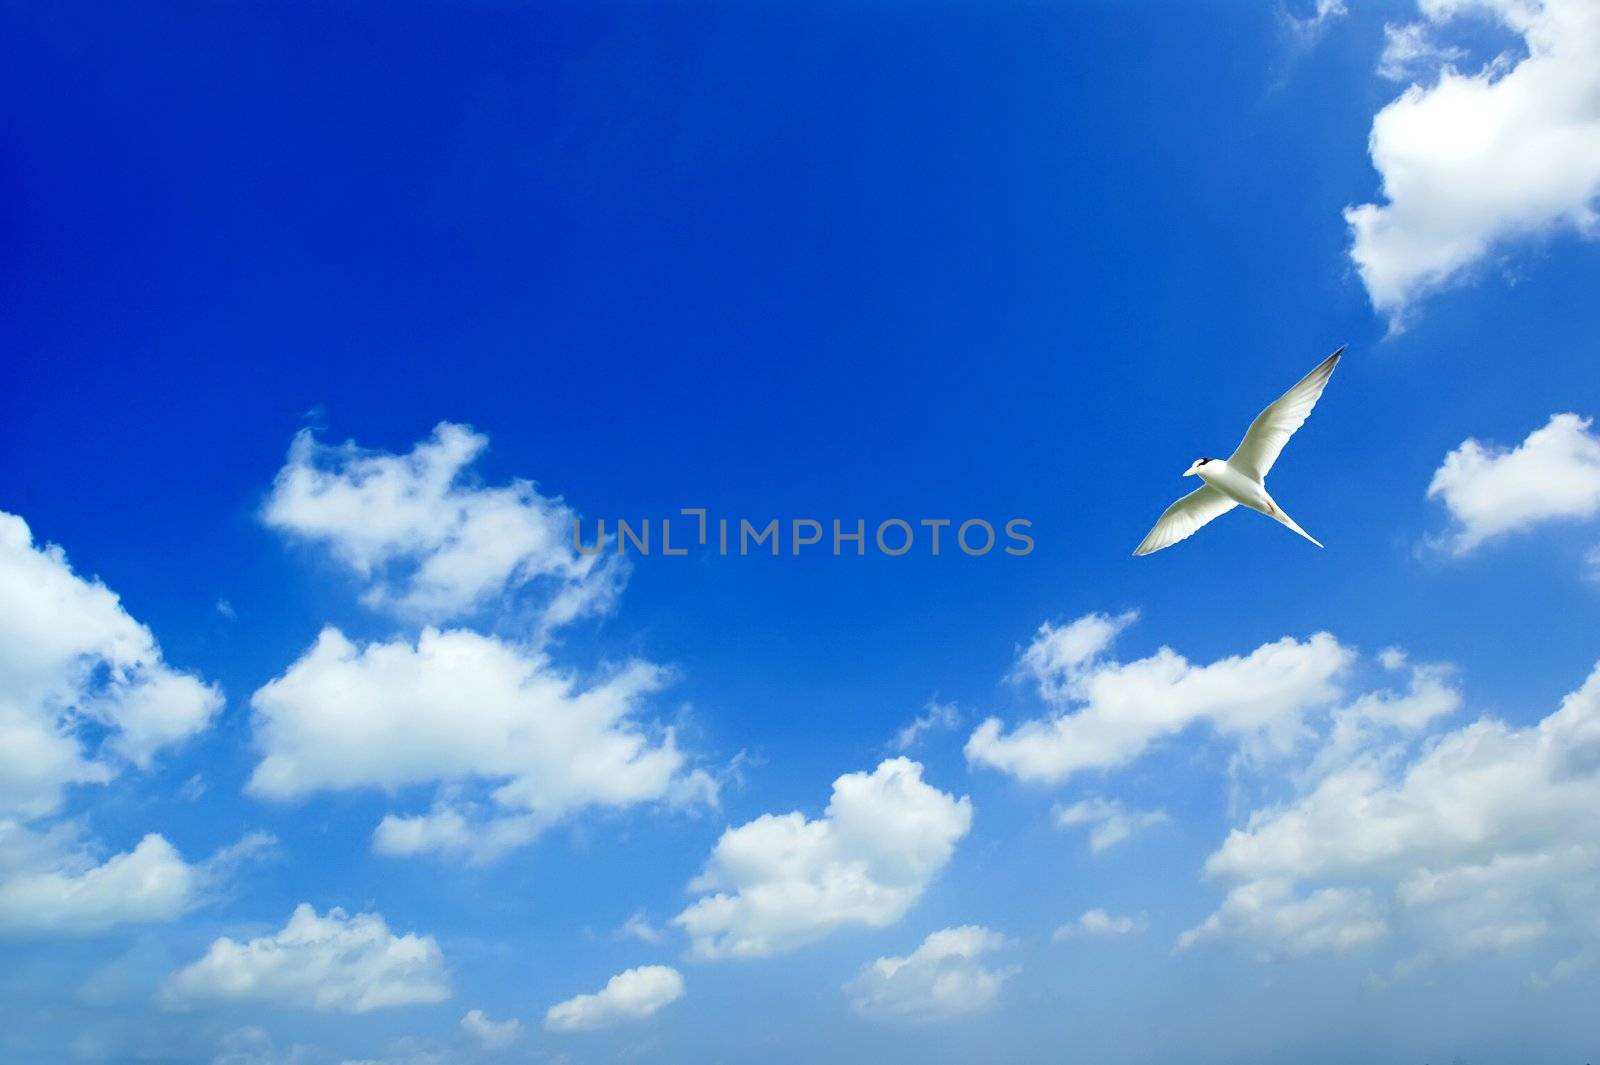 Birds flying in the sky by xfdly5